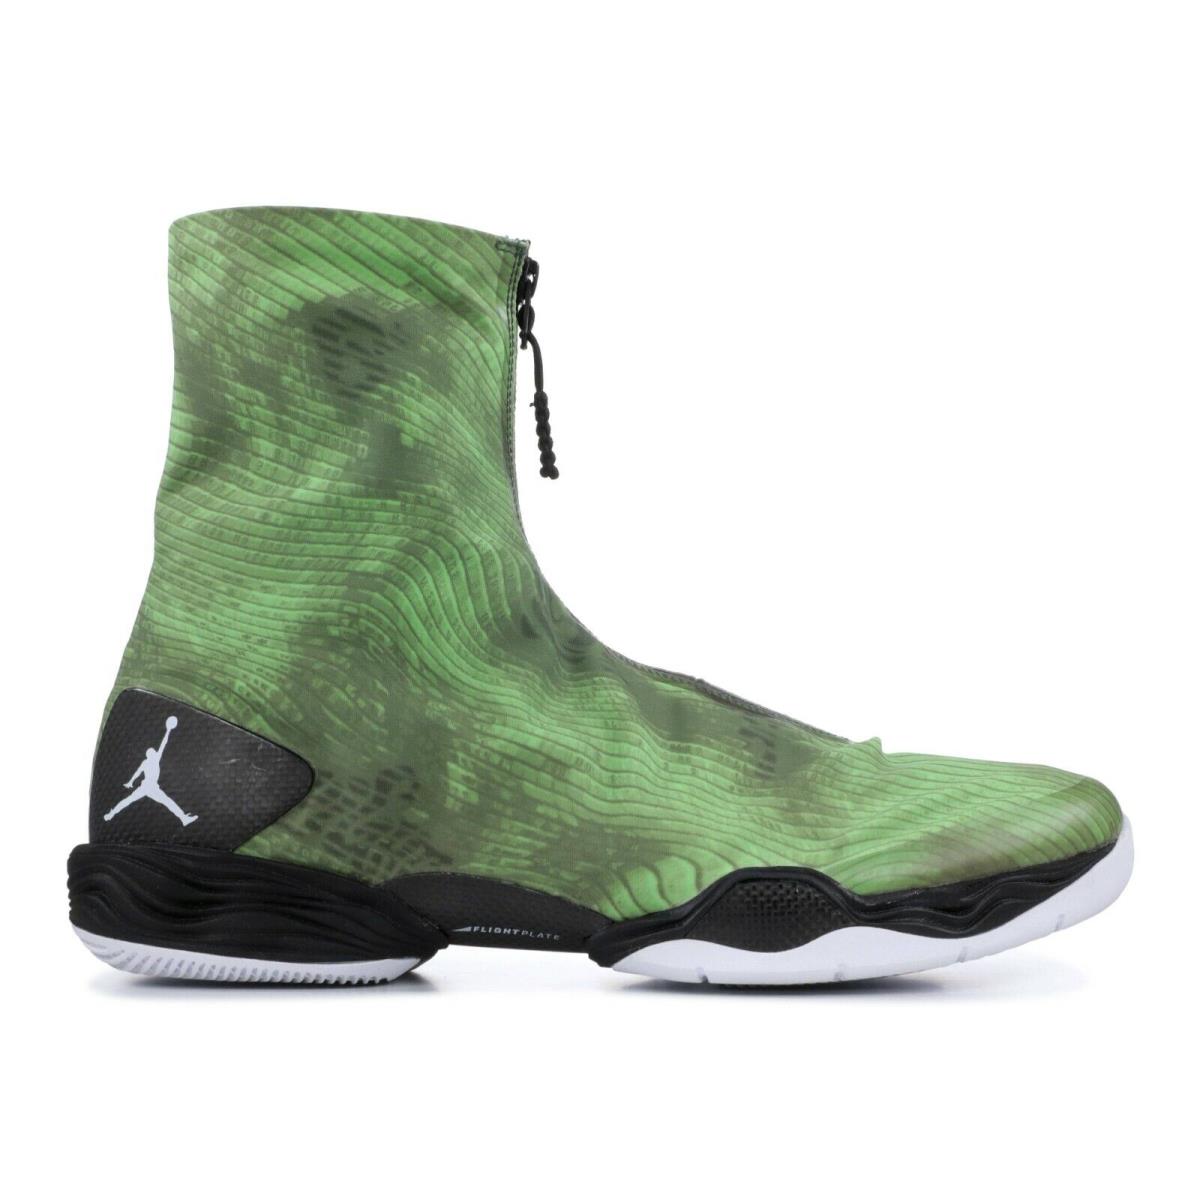 Nike Air Jordan 28 XX8 Camo Reptile Green Size 12. 584832-301